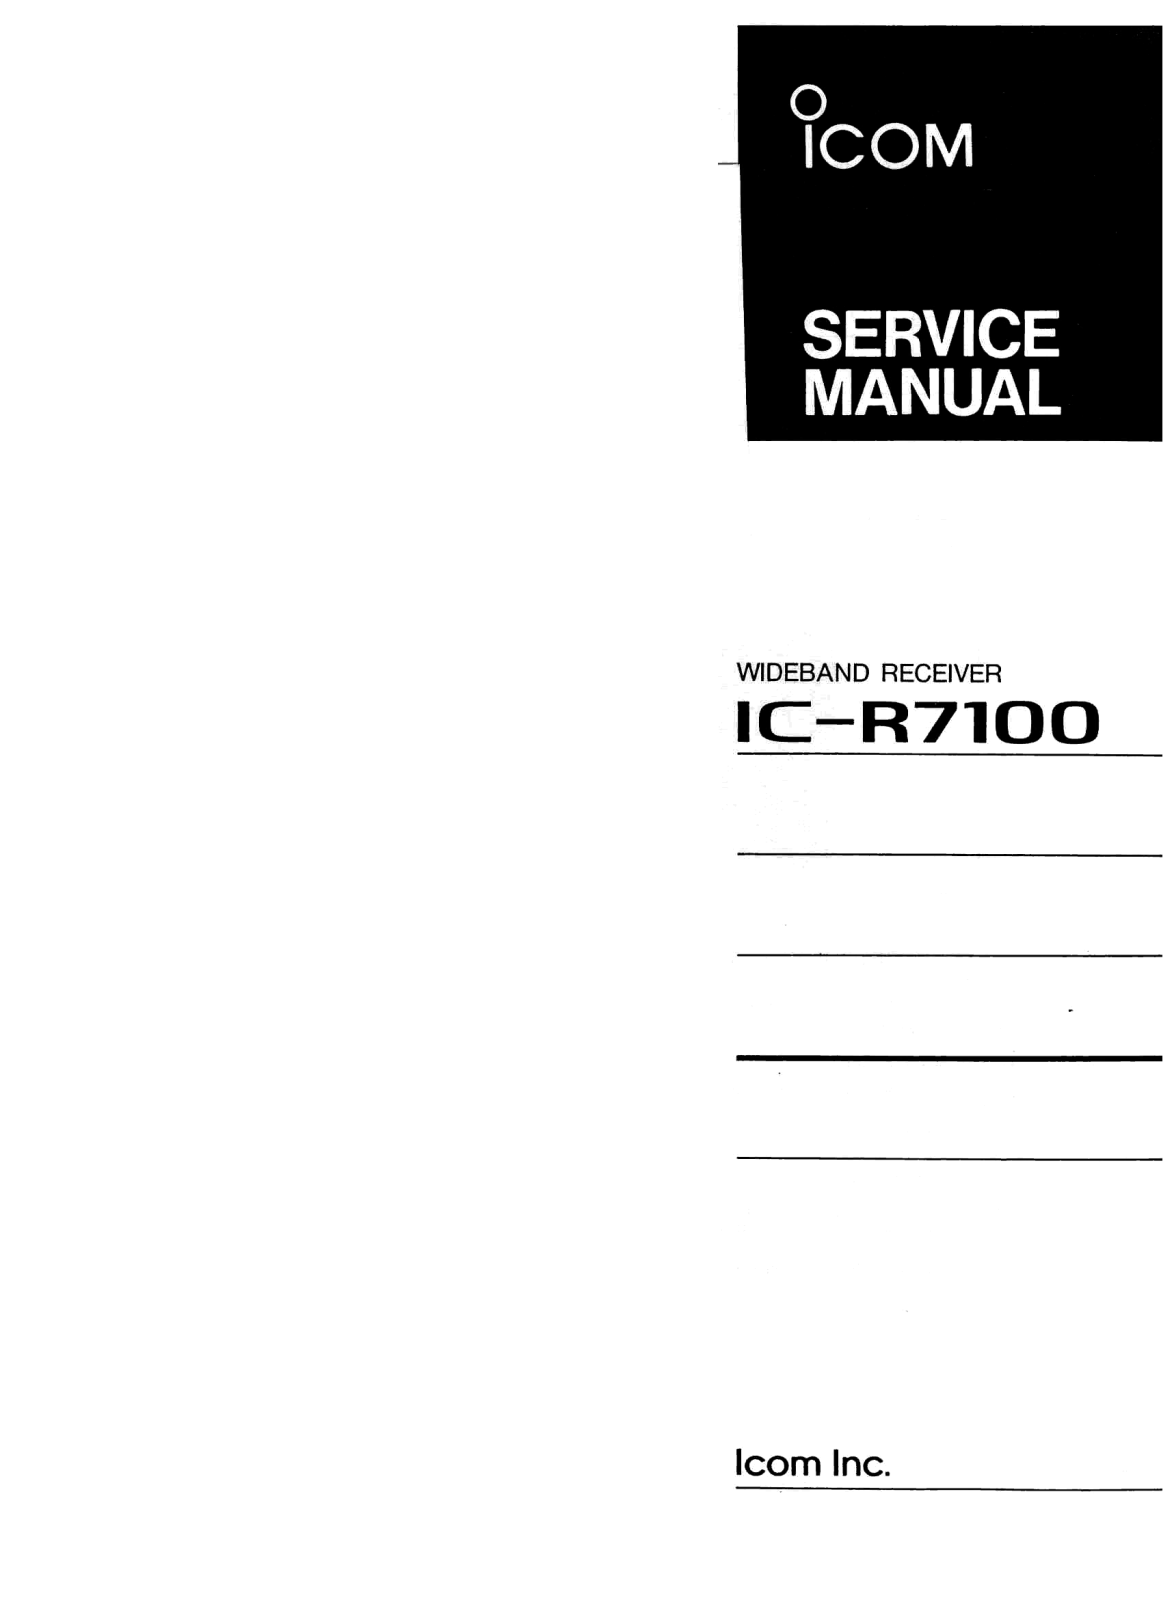 Icom IC-R7100 Service Manual